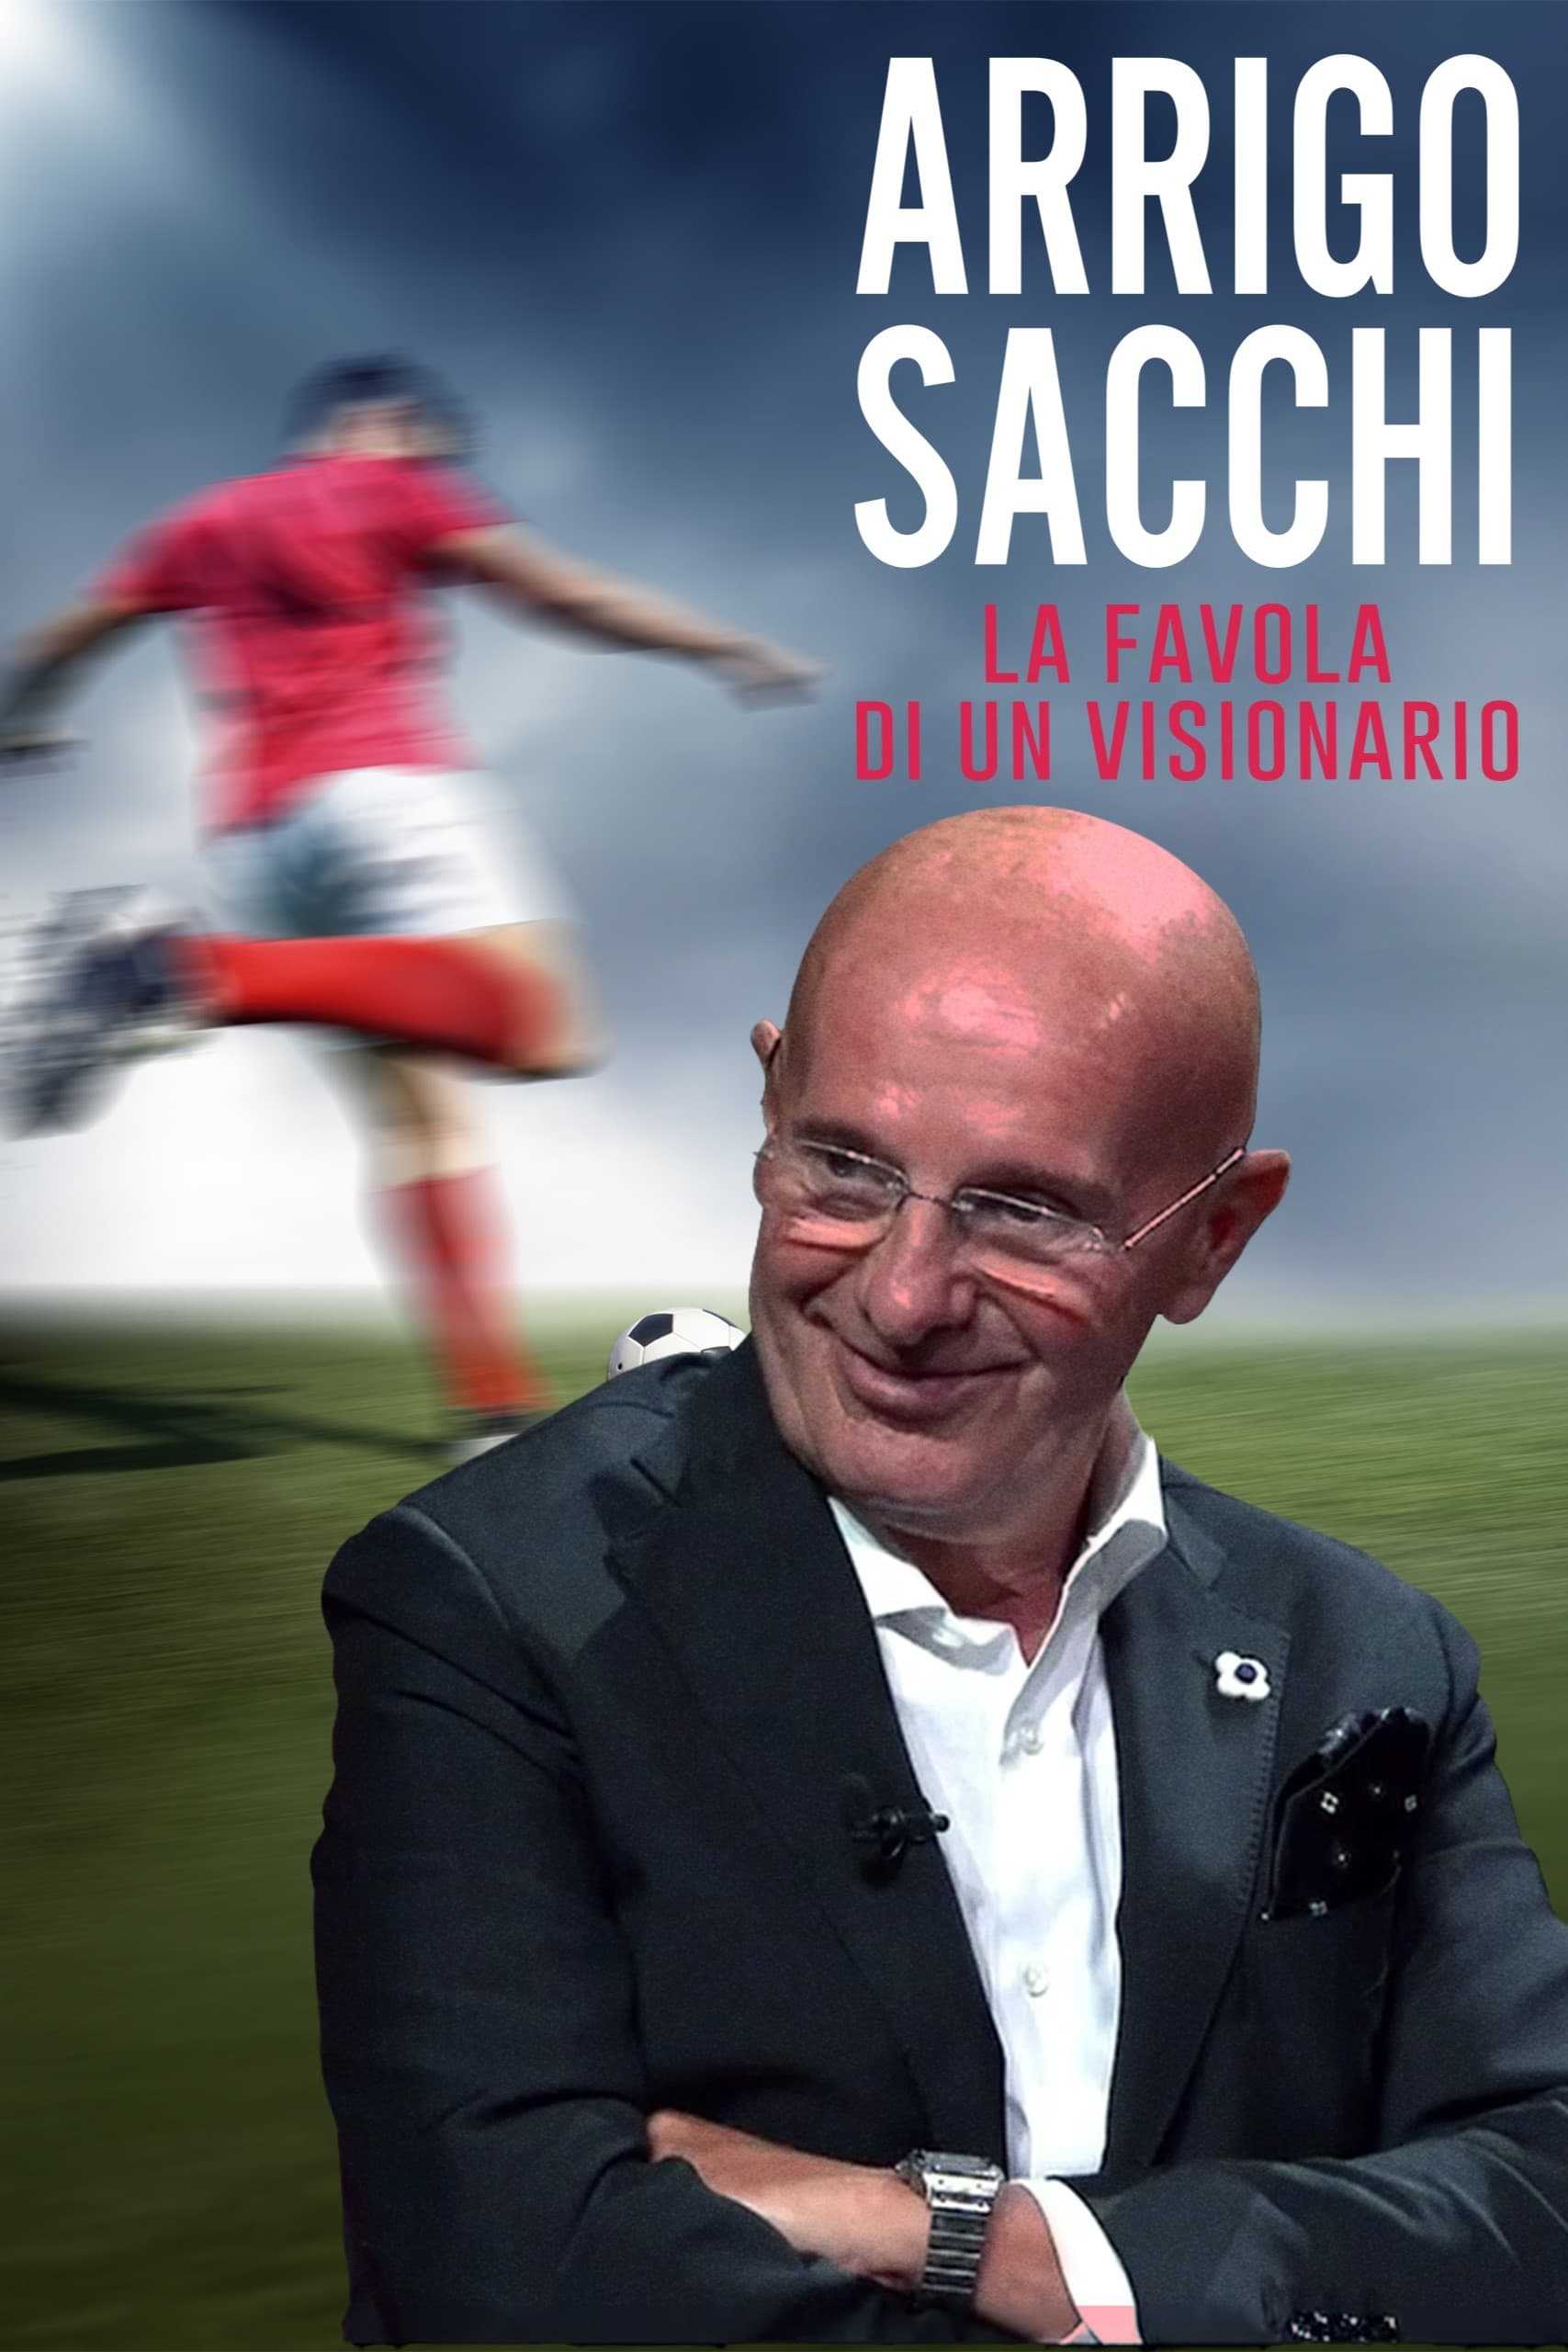 Arrigo Sacchi - La favola di un visionario in streaming